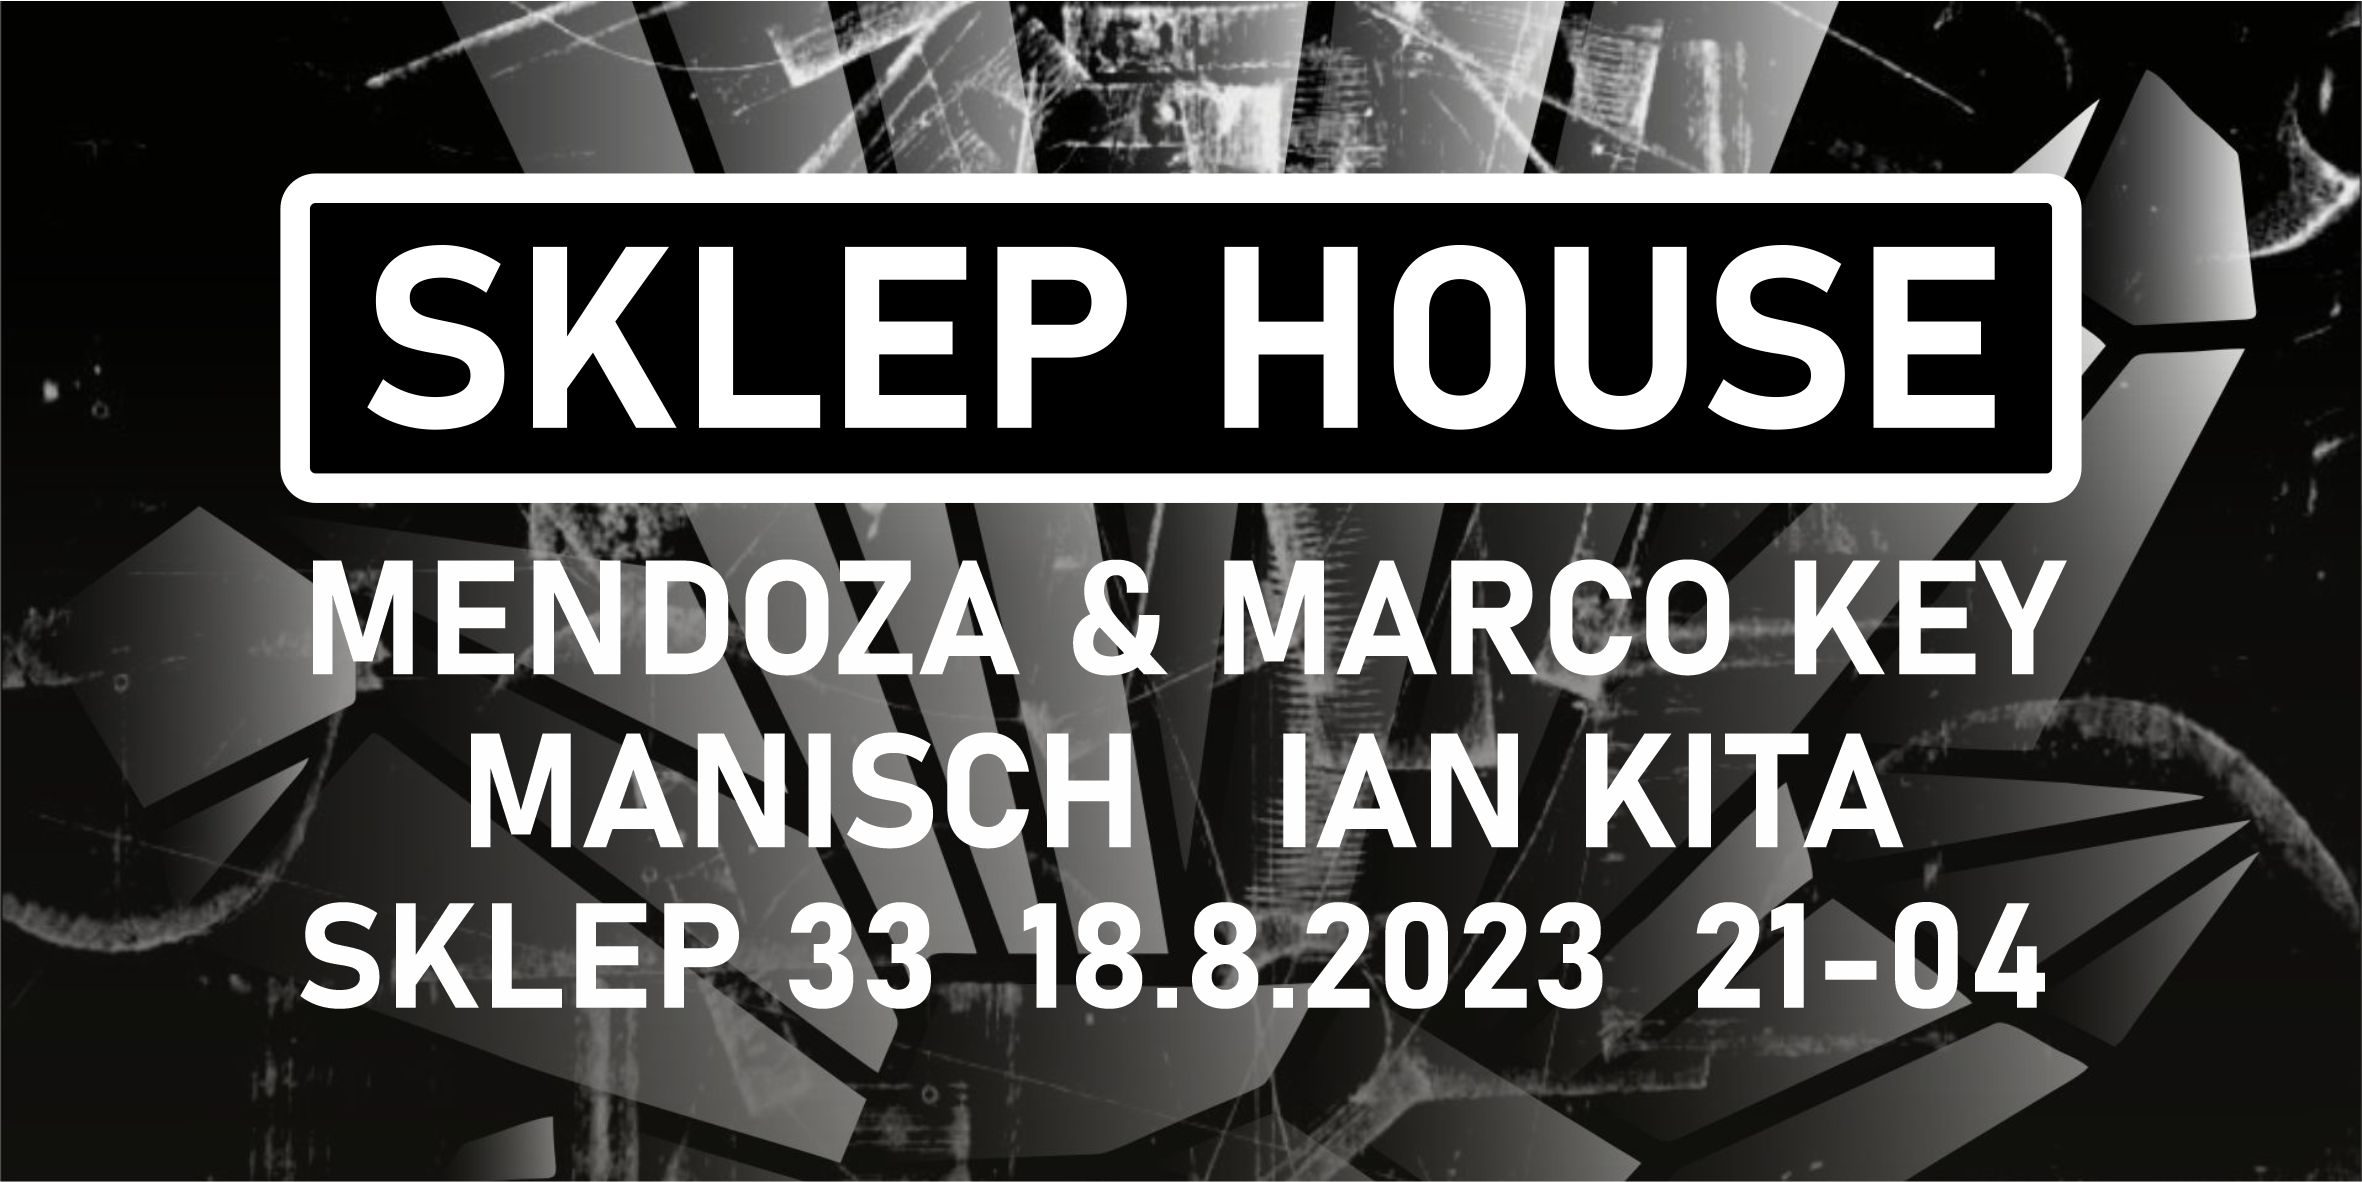 SKLEP HOUSE with Mendoza & Marco Key